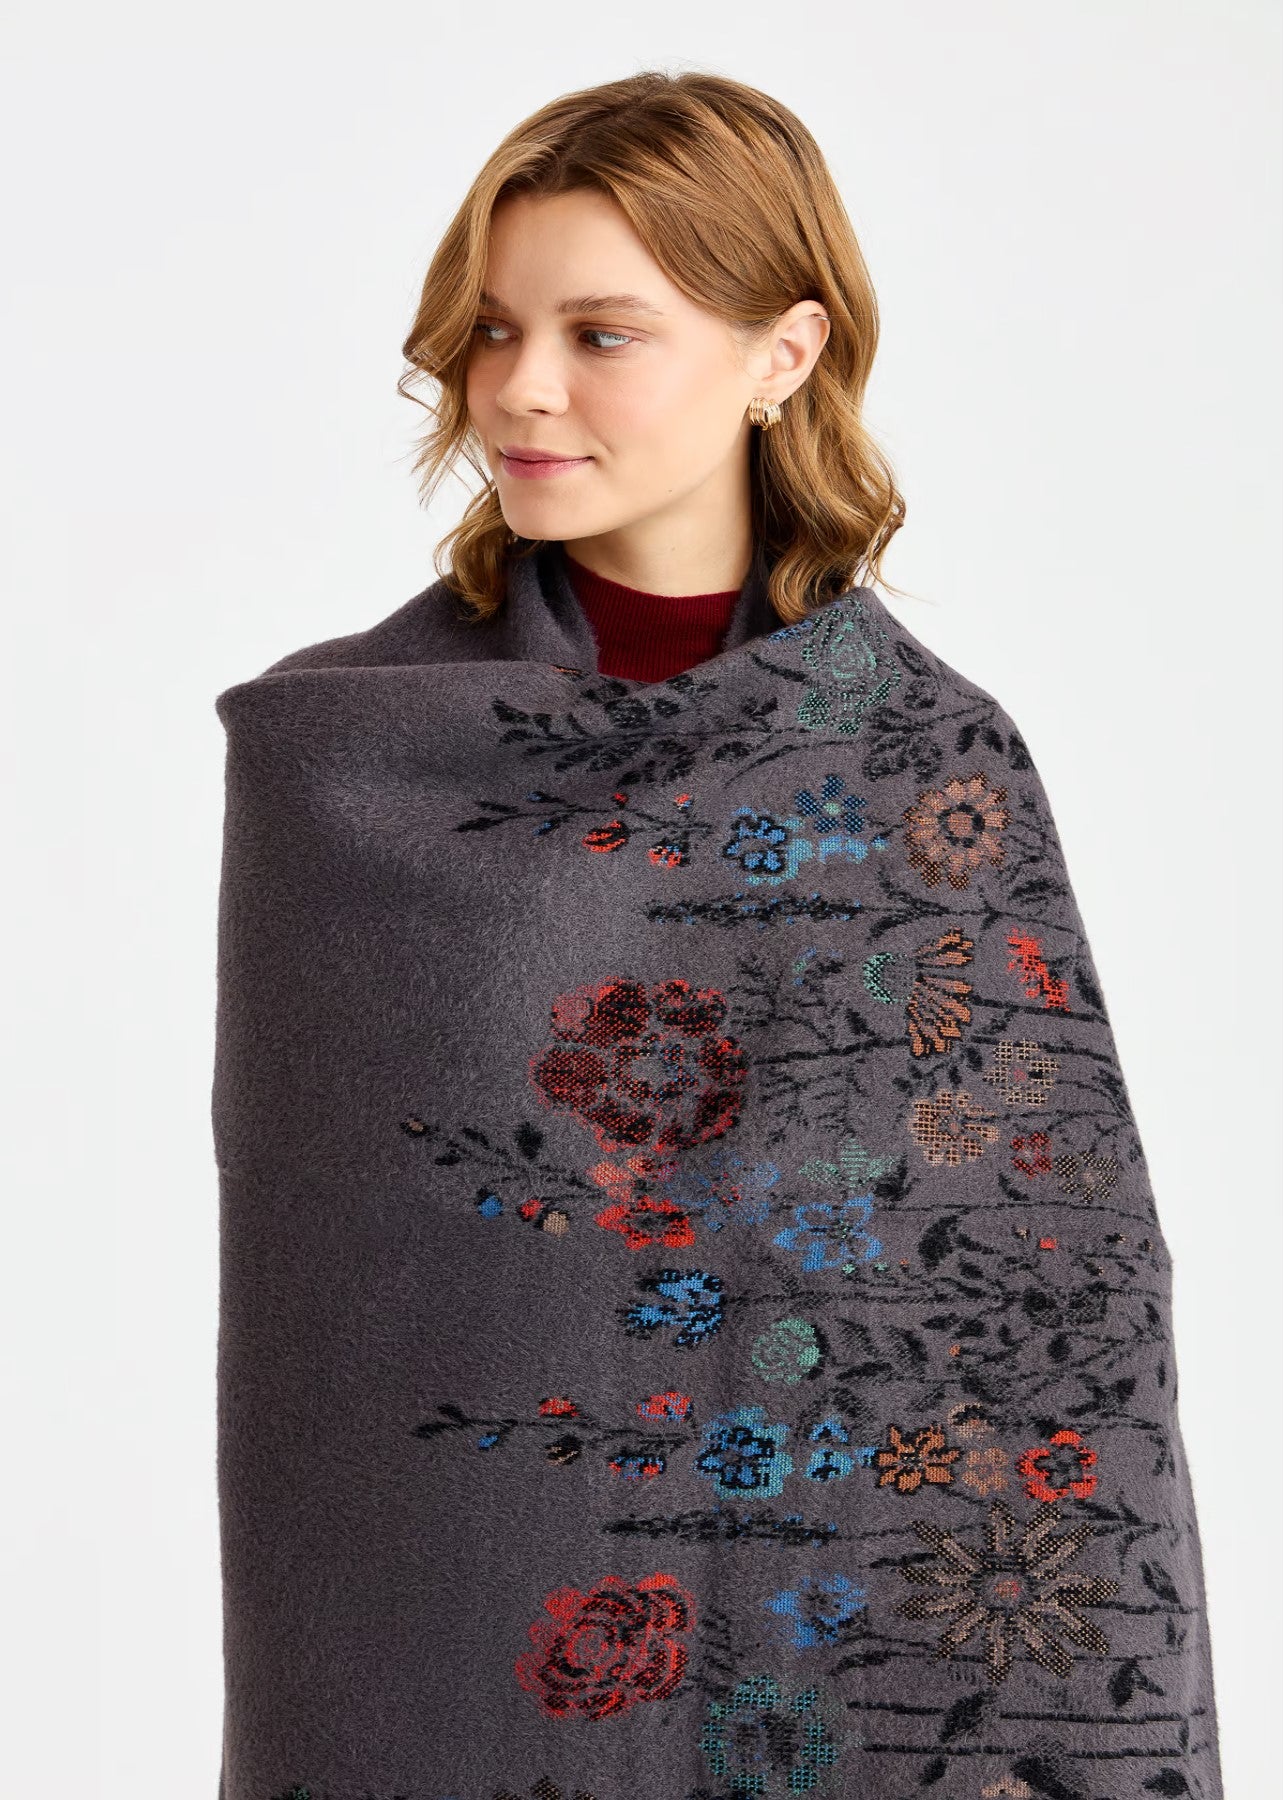 Women's Knitwear Shawl with Wildflower Patterned Edges - 90x180 cm